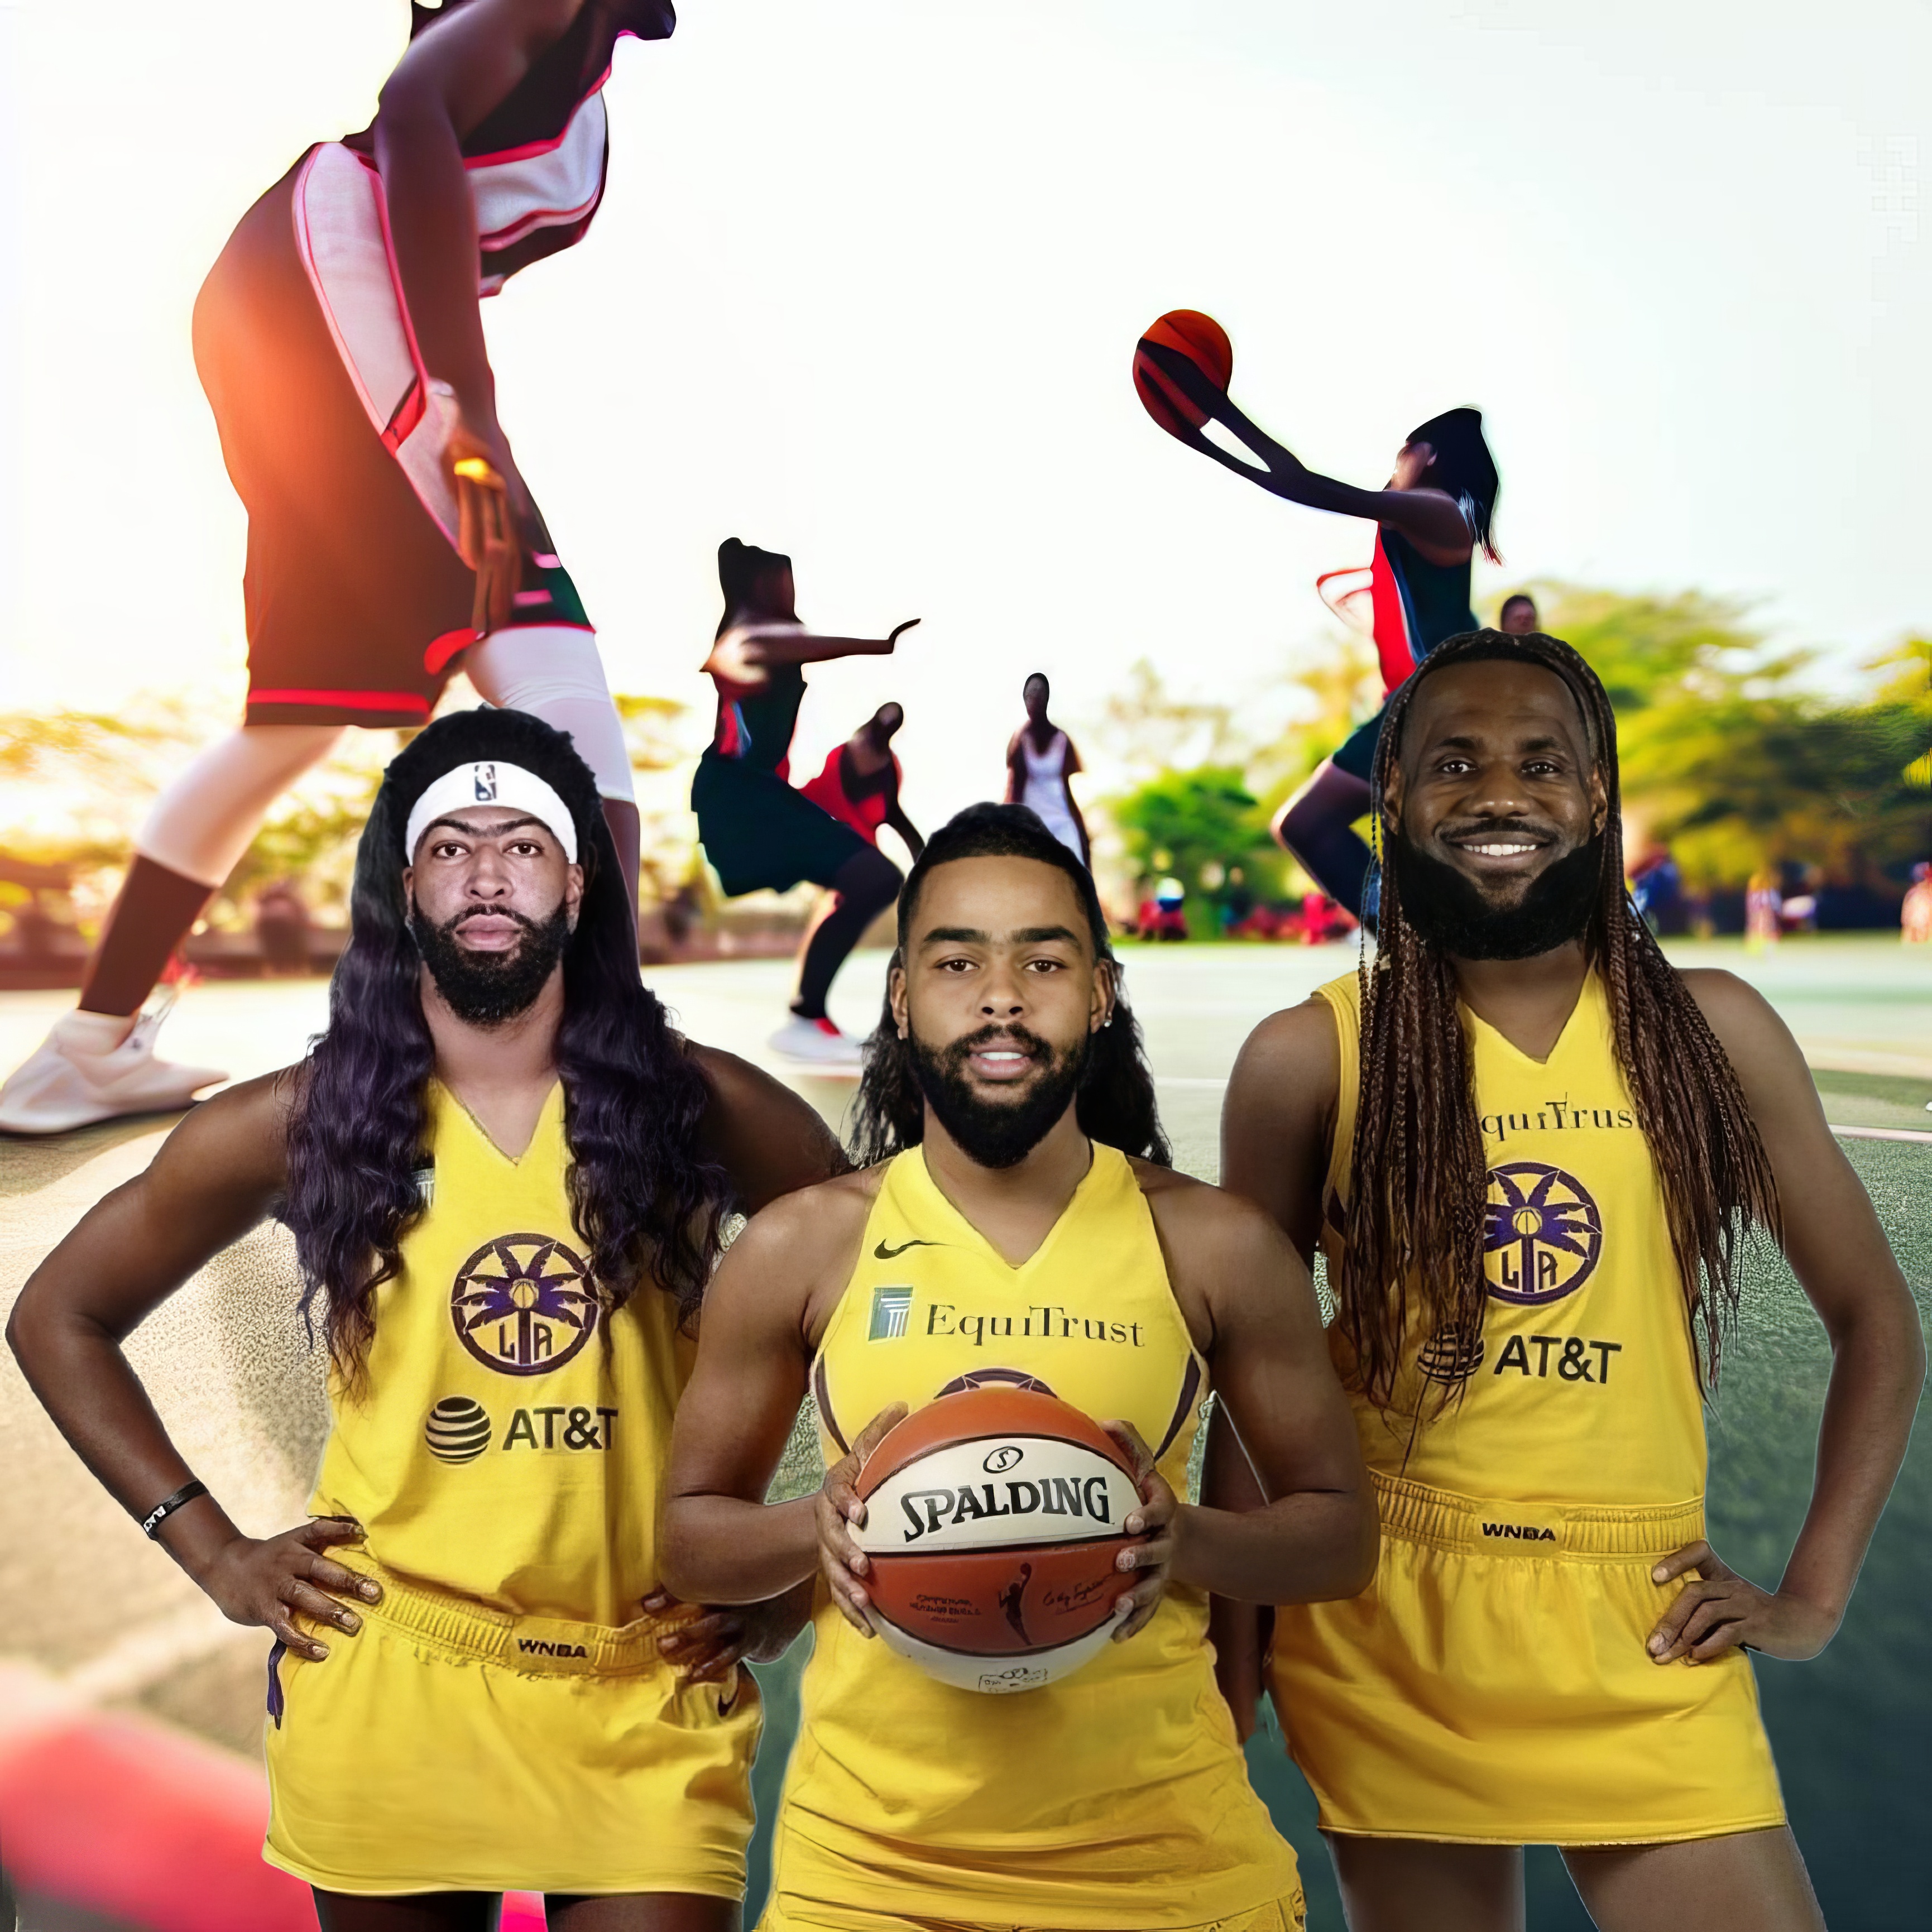 LA Lakers basketball players dressed as WNBA players.